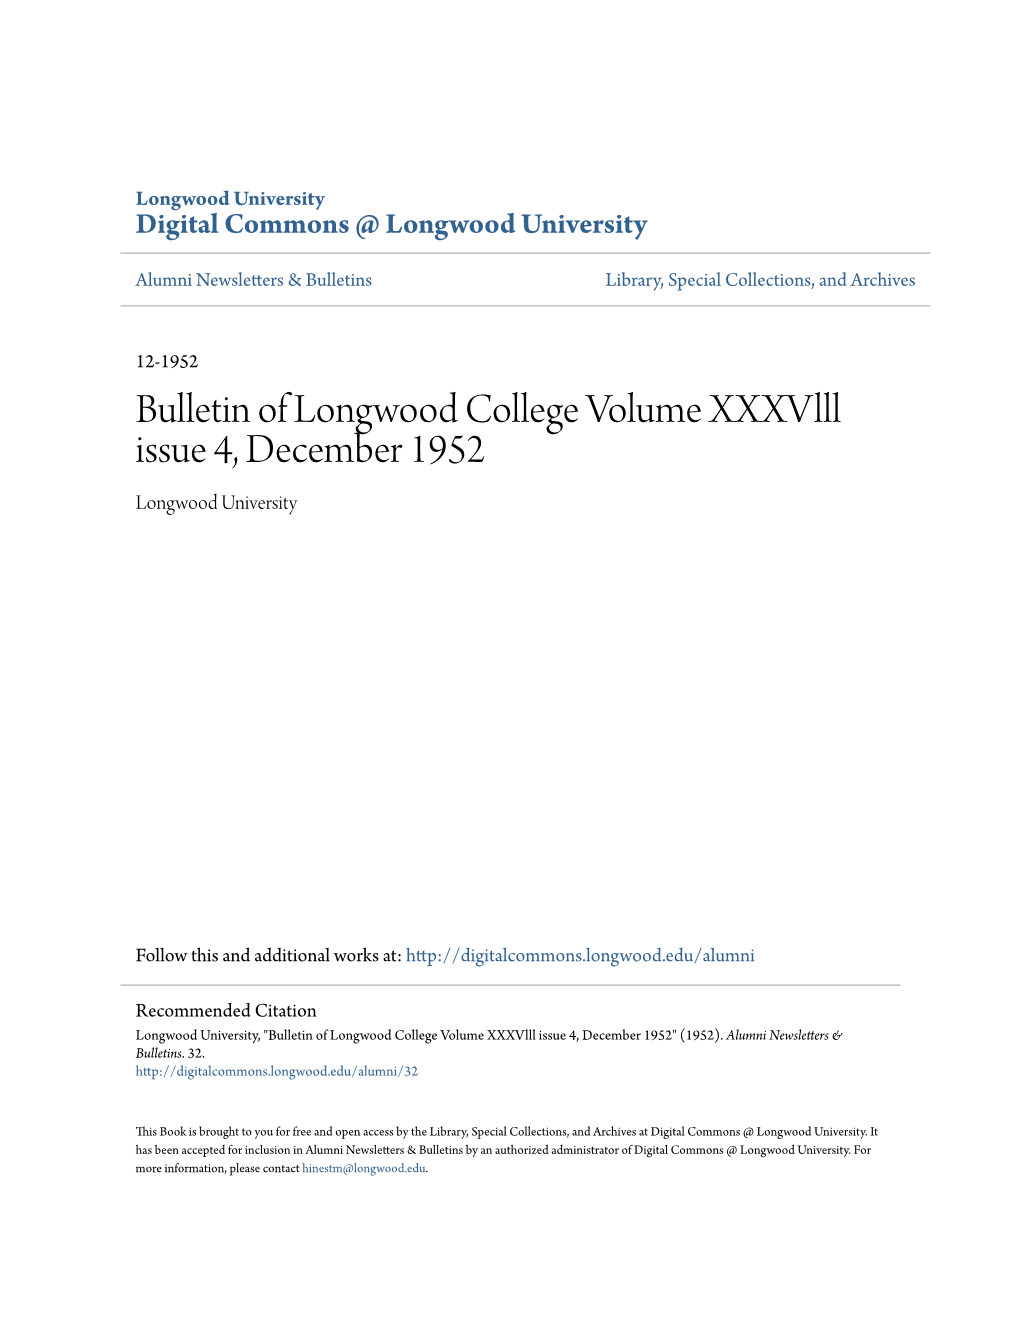 Bulletin of Longwood College Volume Xxxvlll Issue 4, December 1952 Longwood University